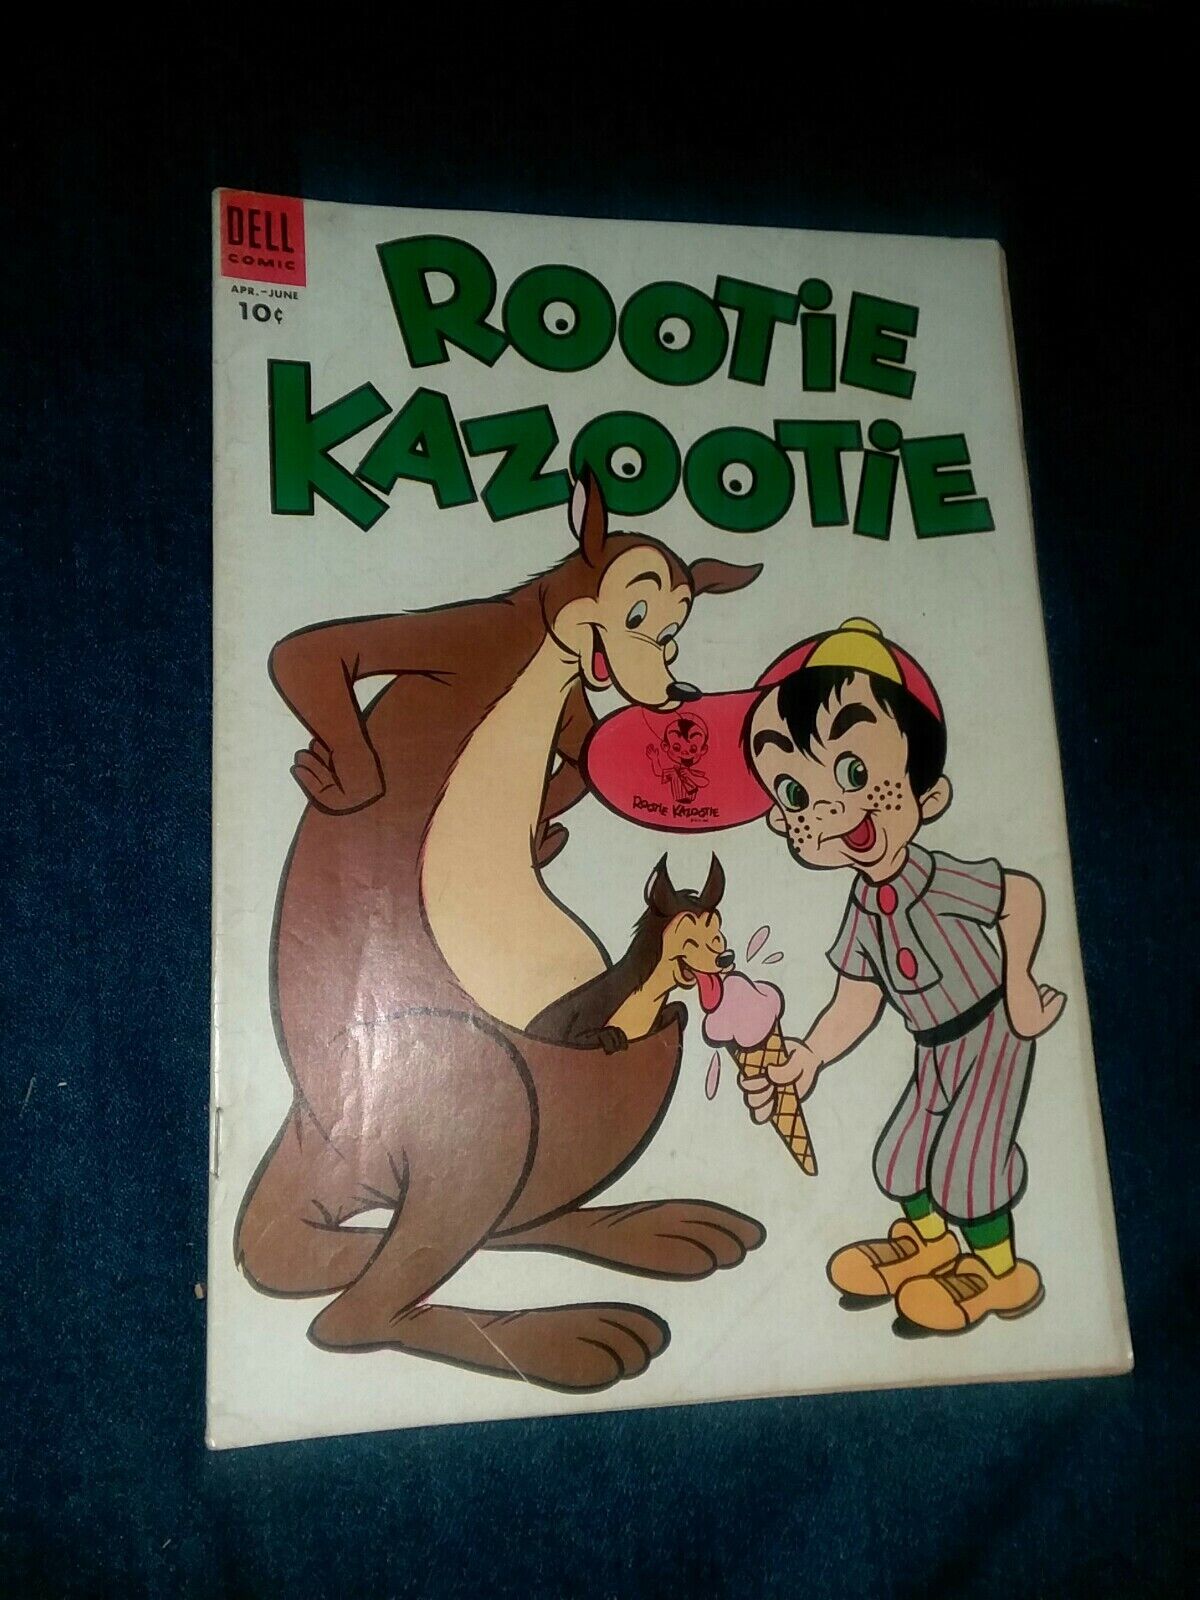 Rootie Kazootie #4 dell comics 1954 golden age tv show ice cream/Kangaroo cover